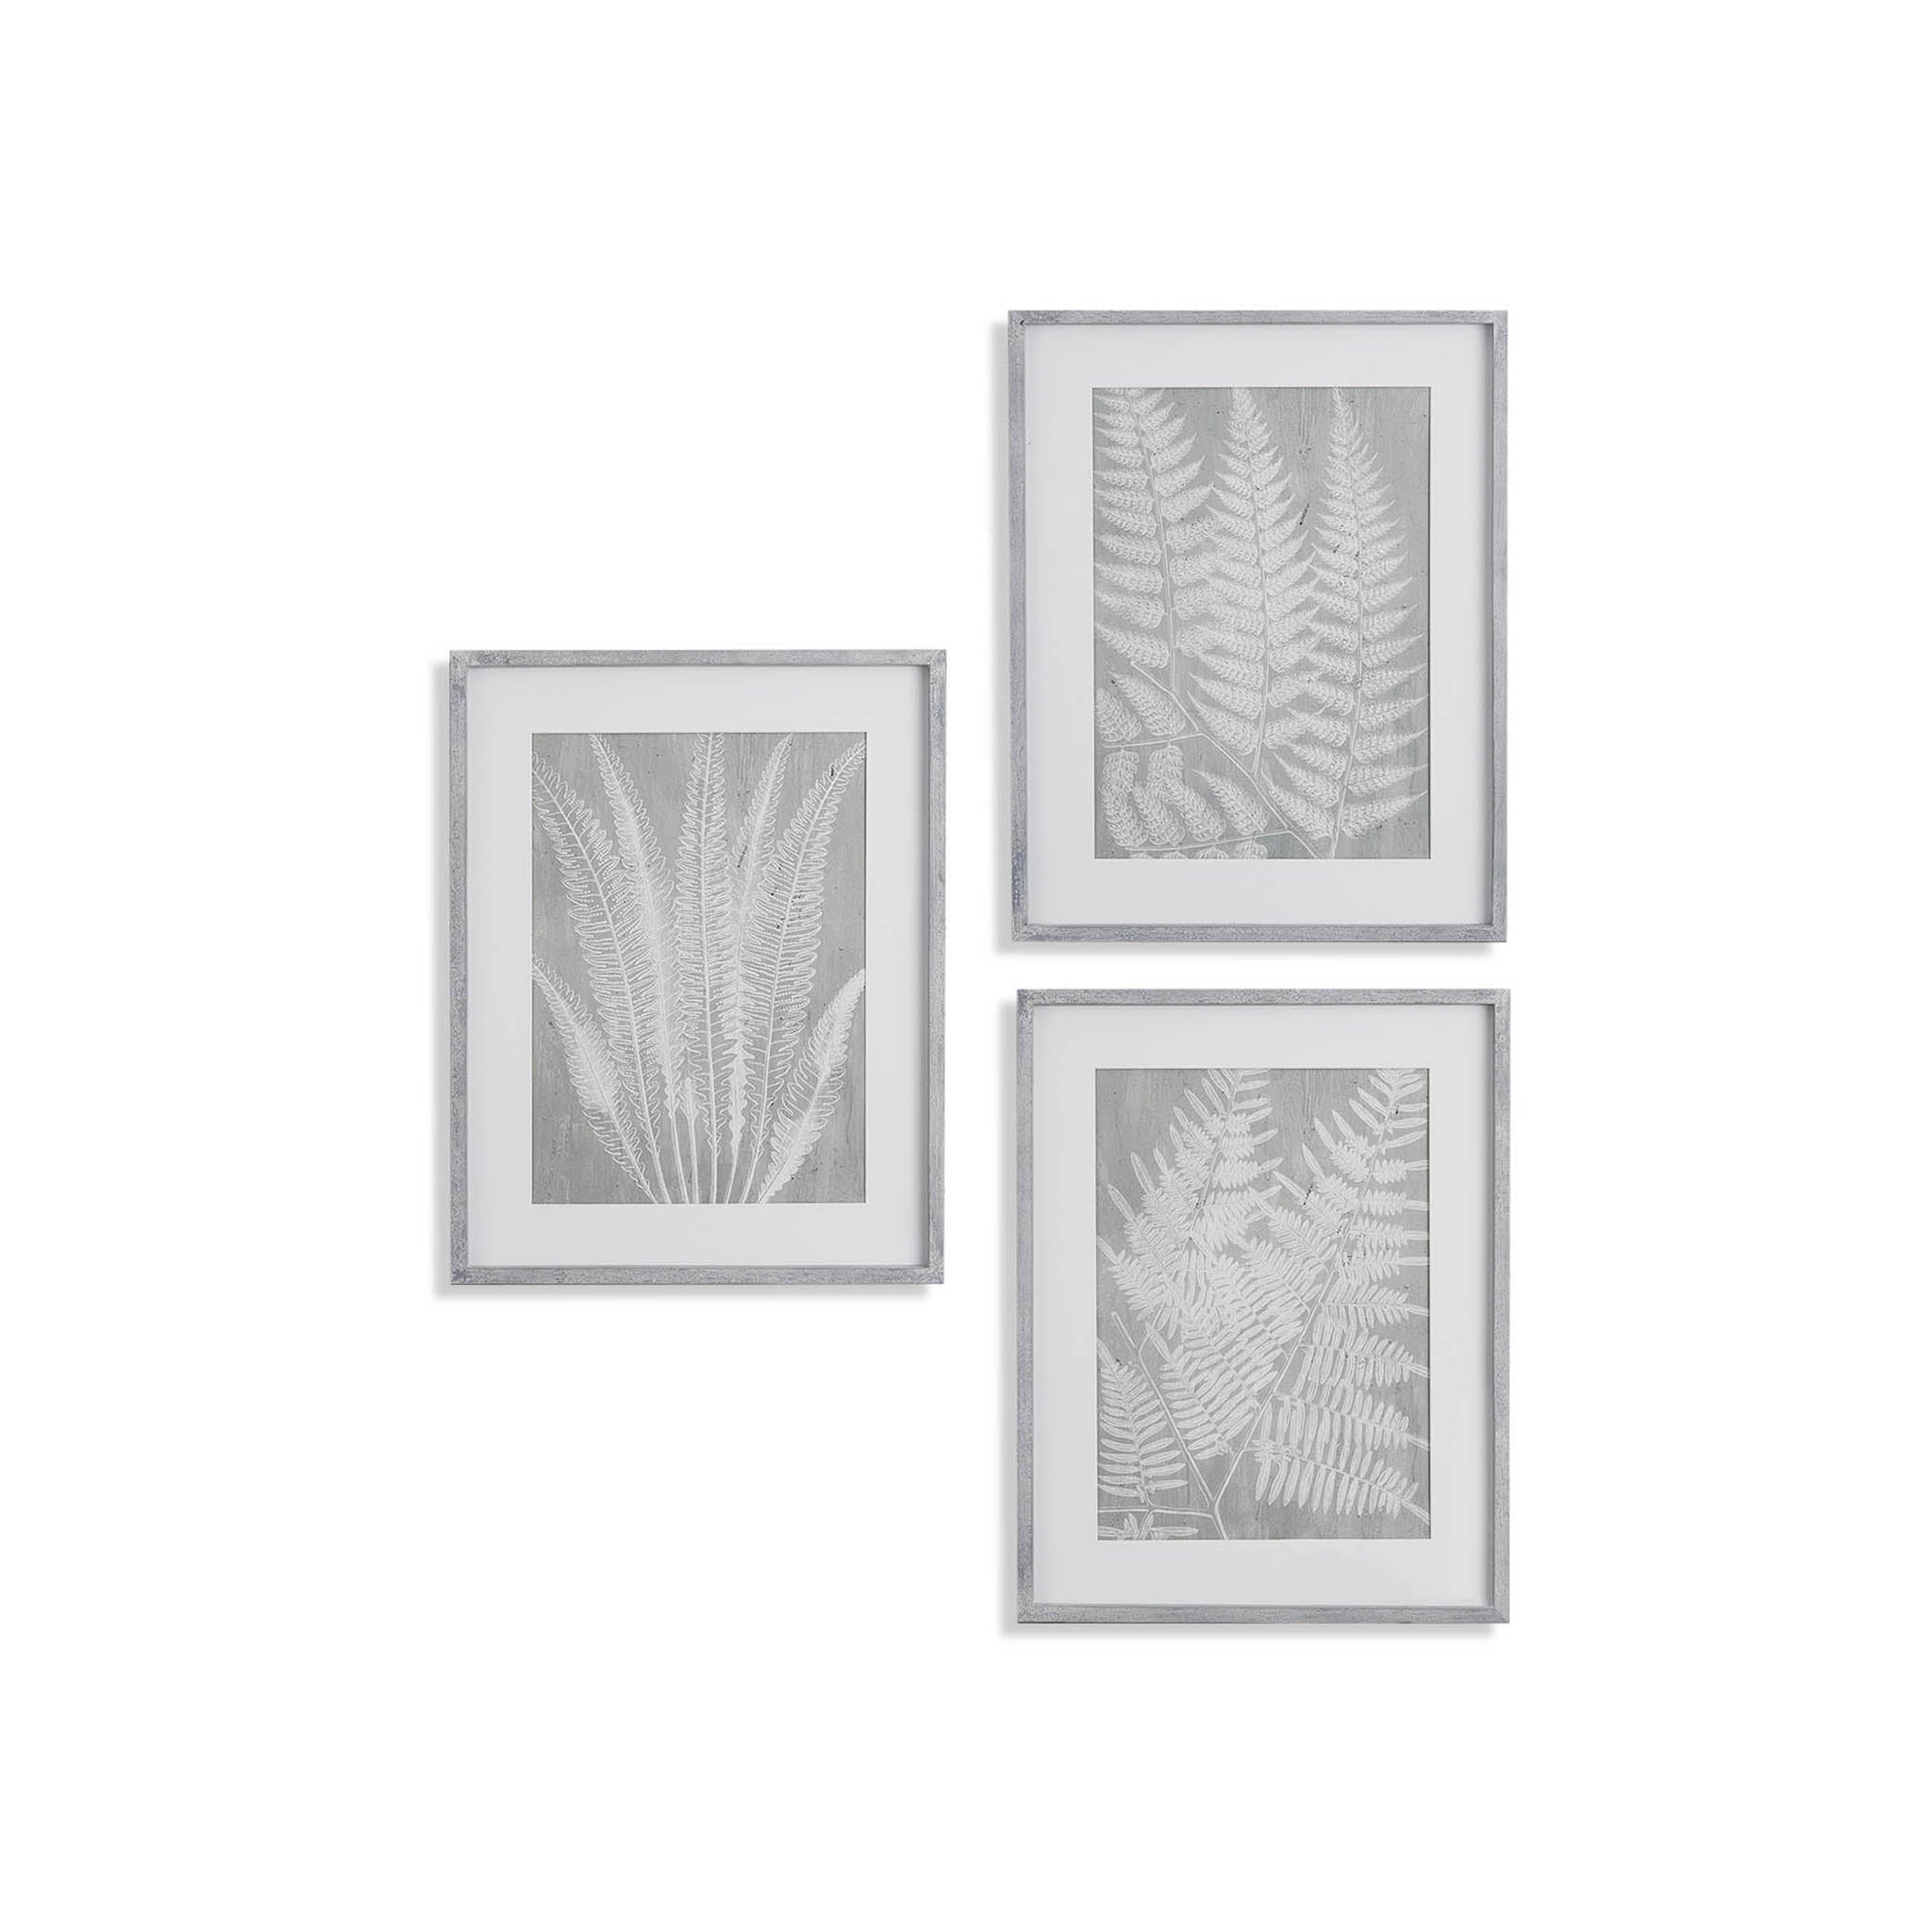 Botanical Fern Prints, Set of 3